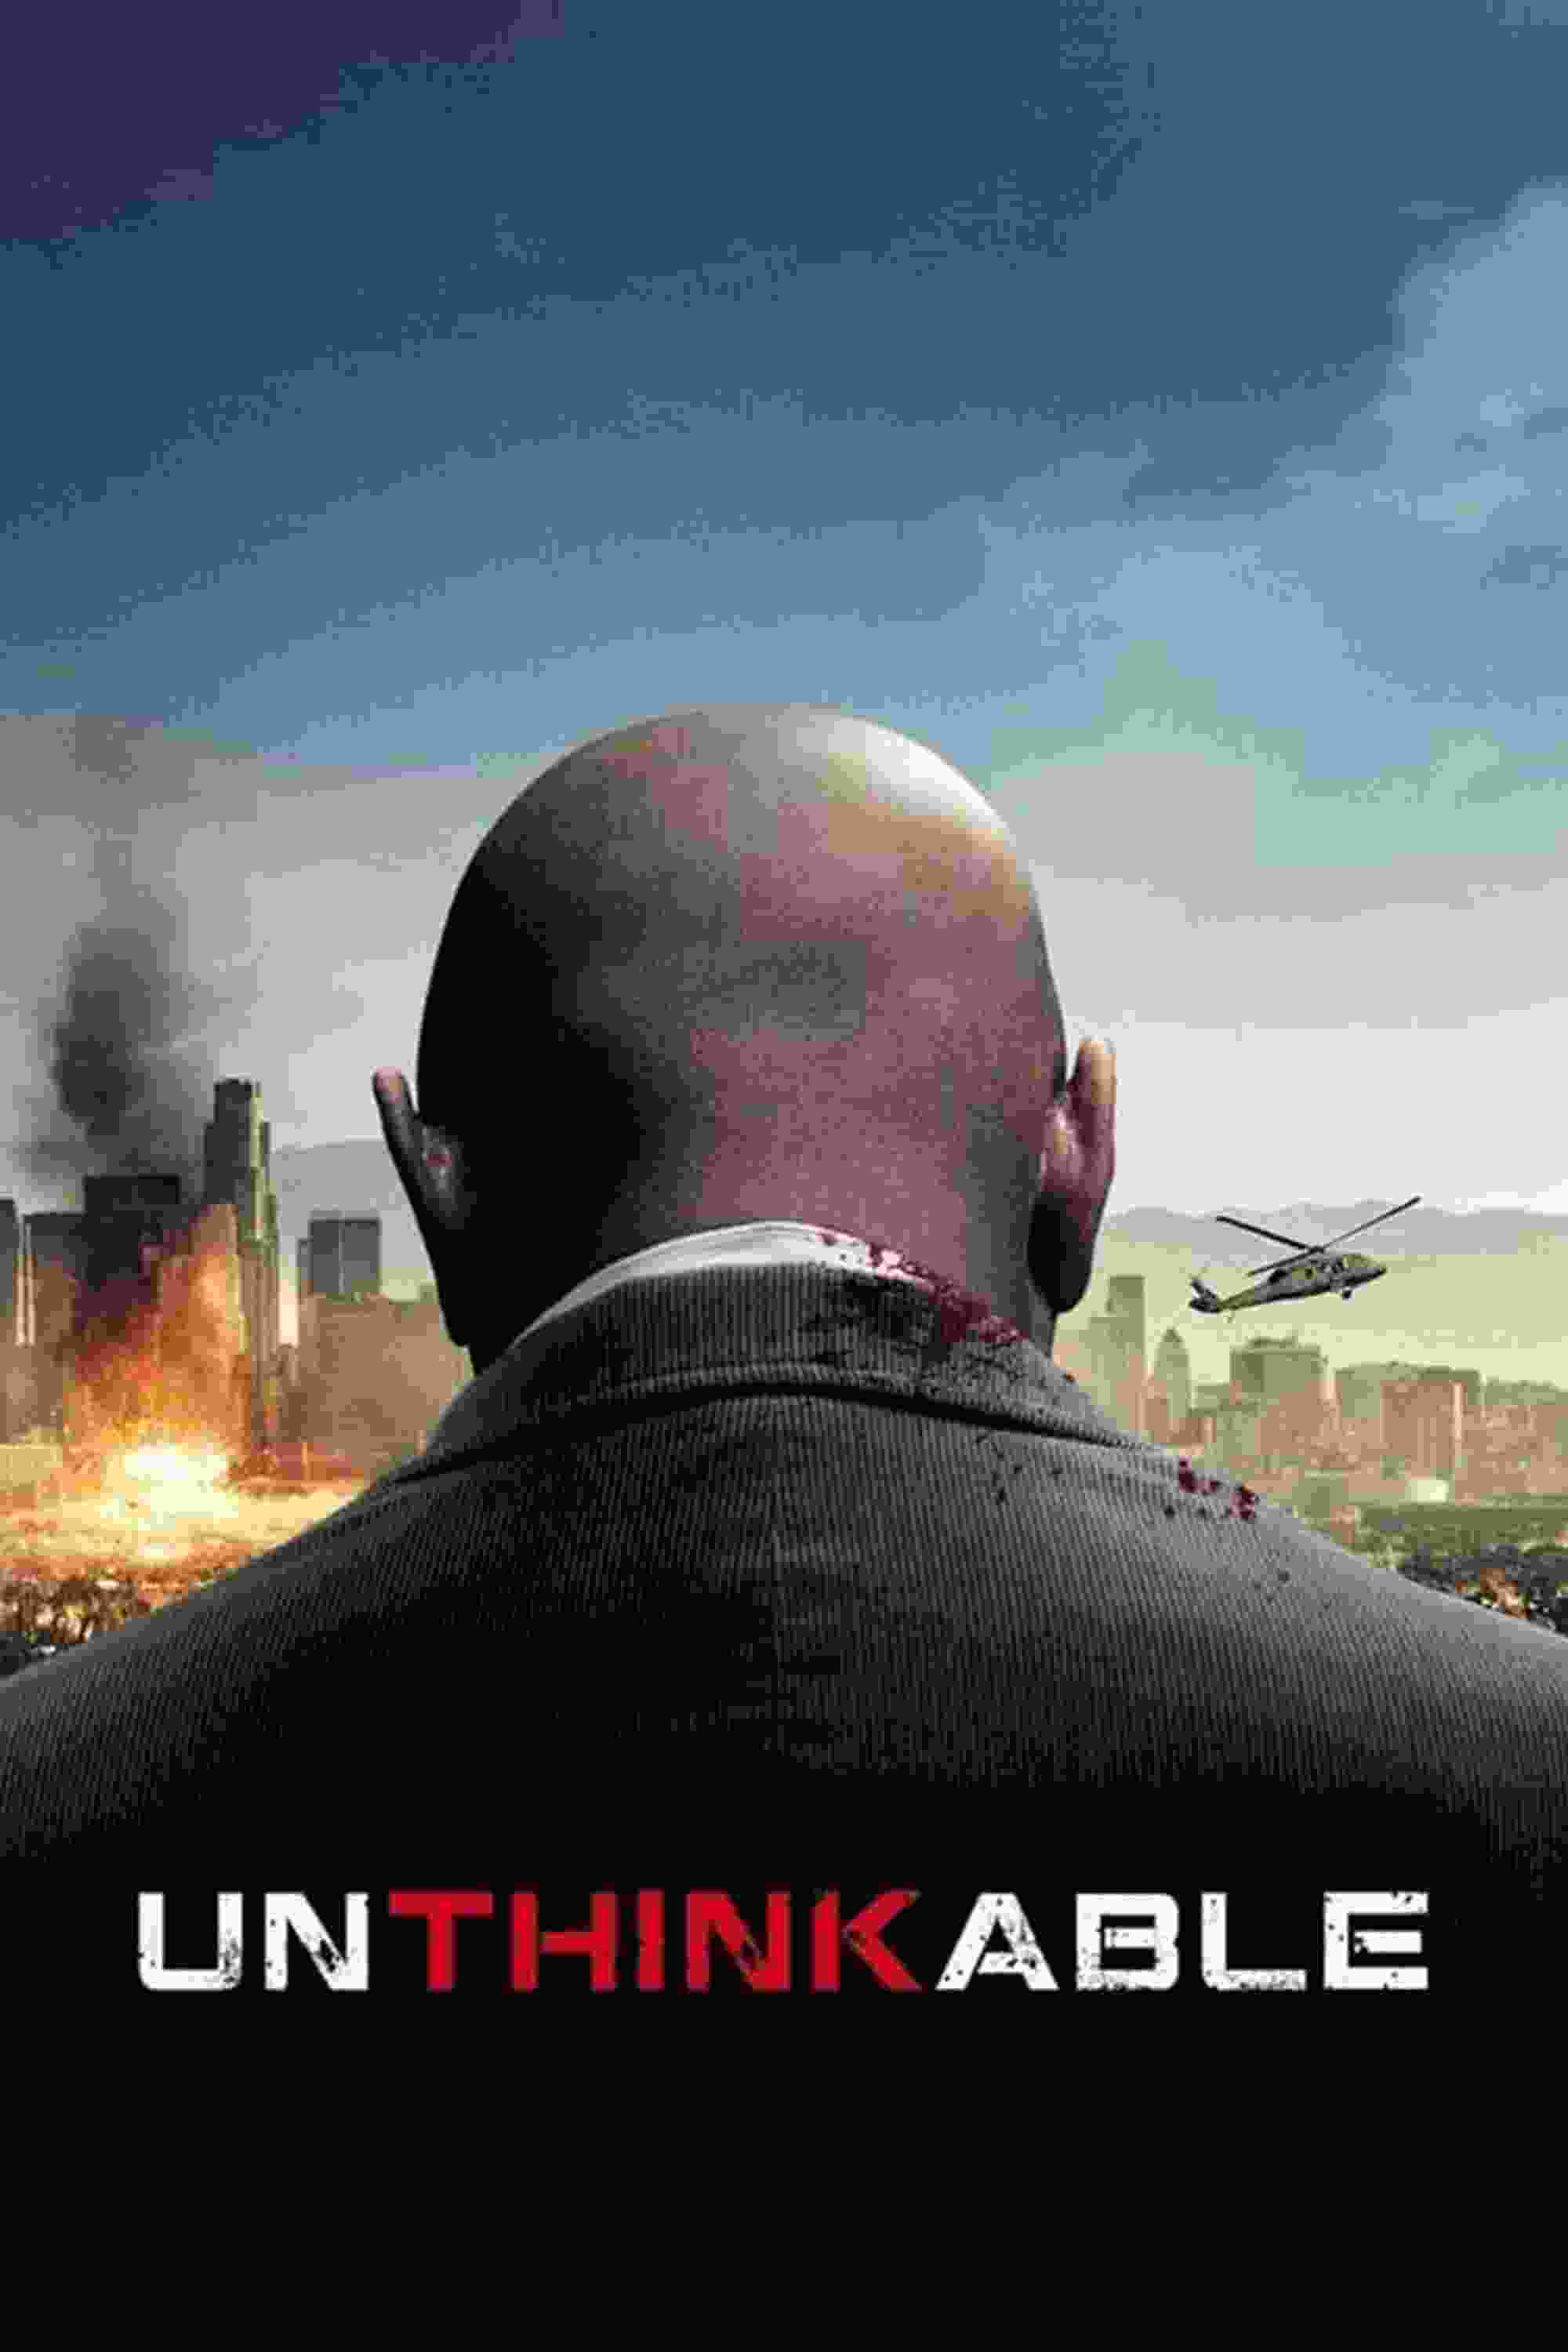 Unthinkable (2010) Samuel L. Jackson